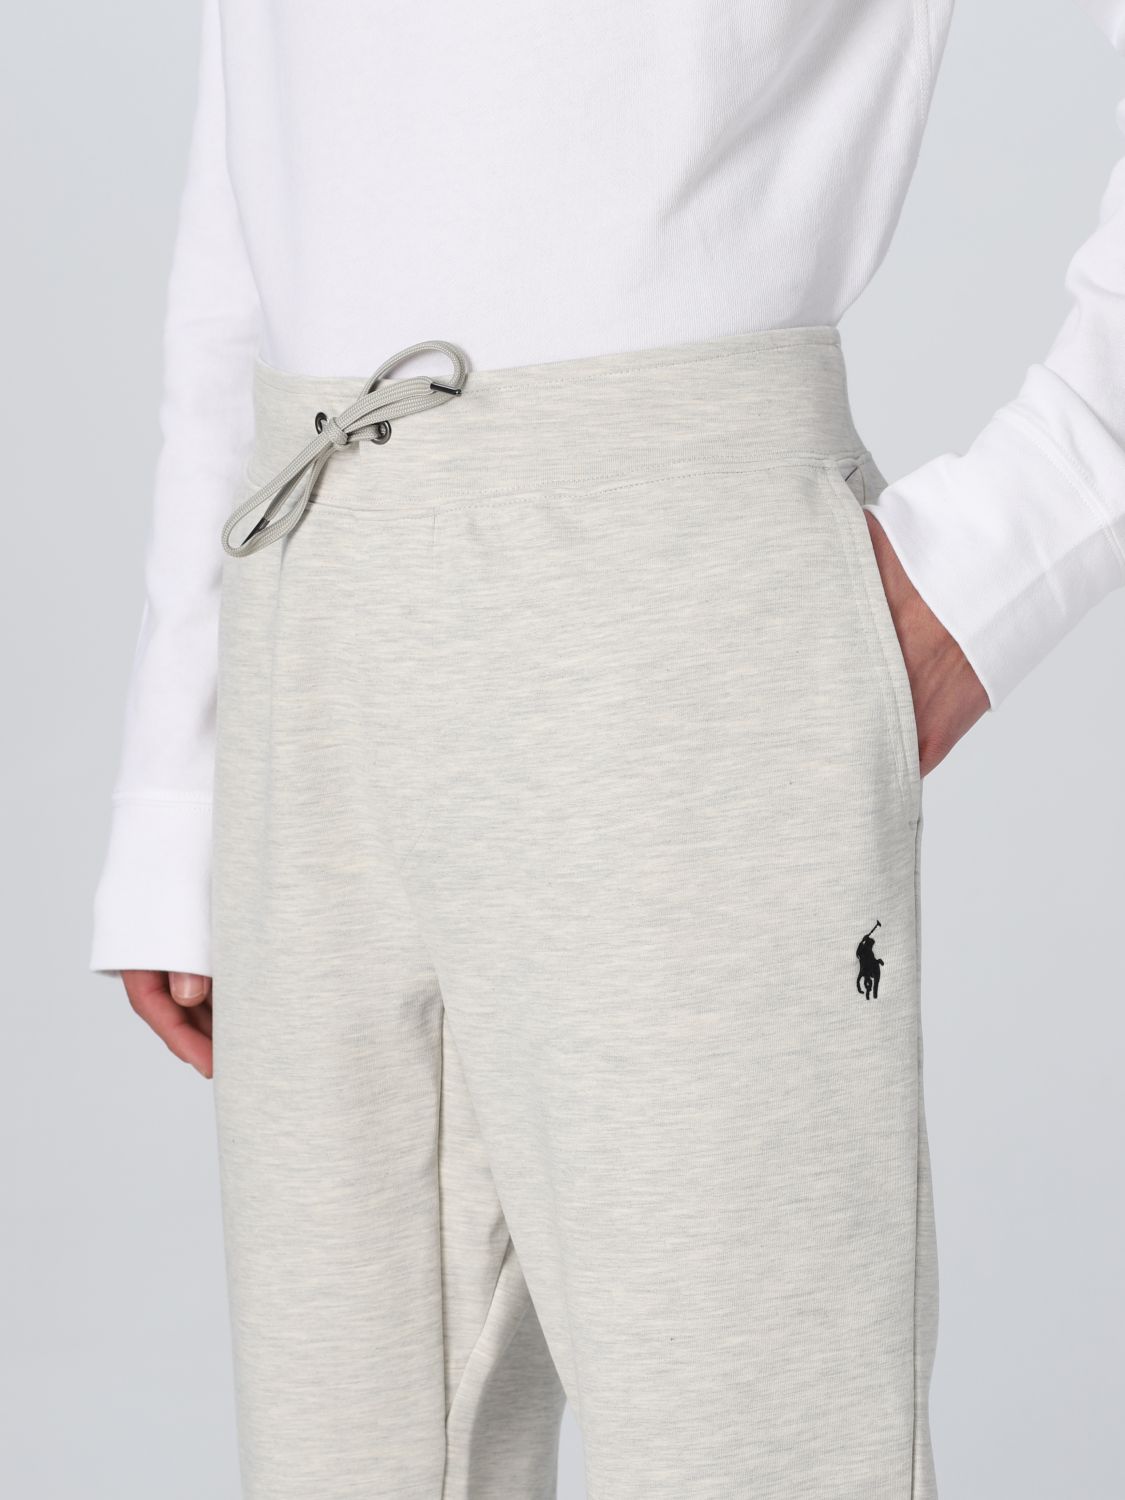 POLO RALPH LAUREN: pants for man - White | Polo Ralph Lauren pants ...